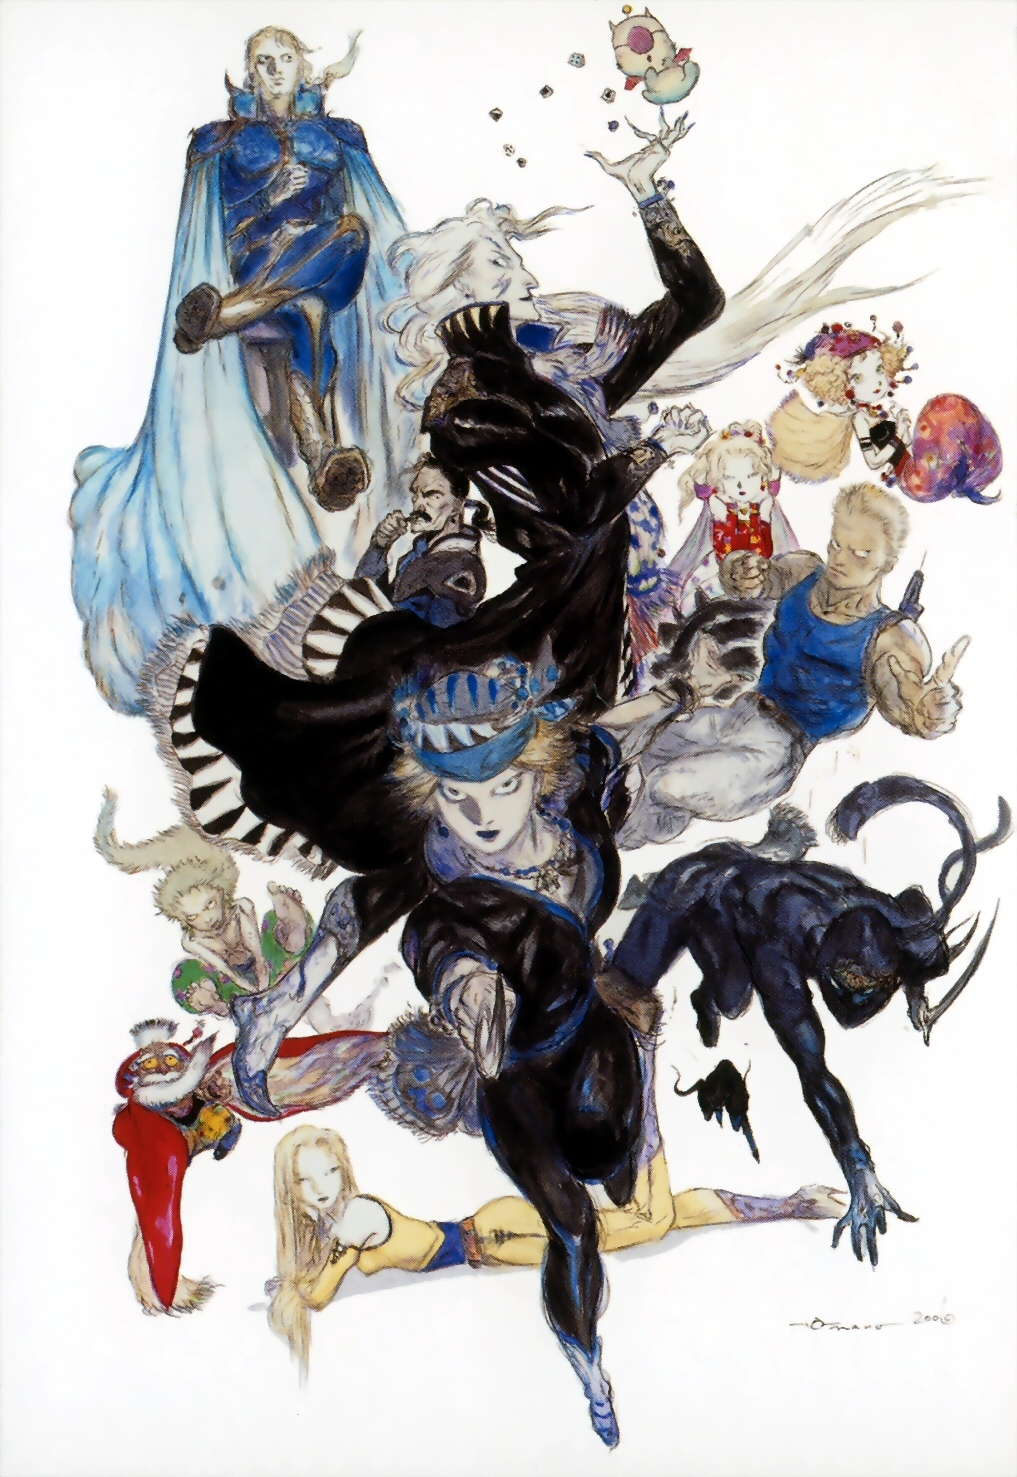 Final Fantasy VI, Final Fantasy Wiki